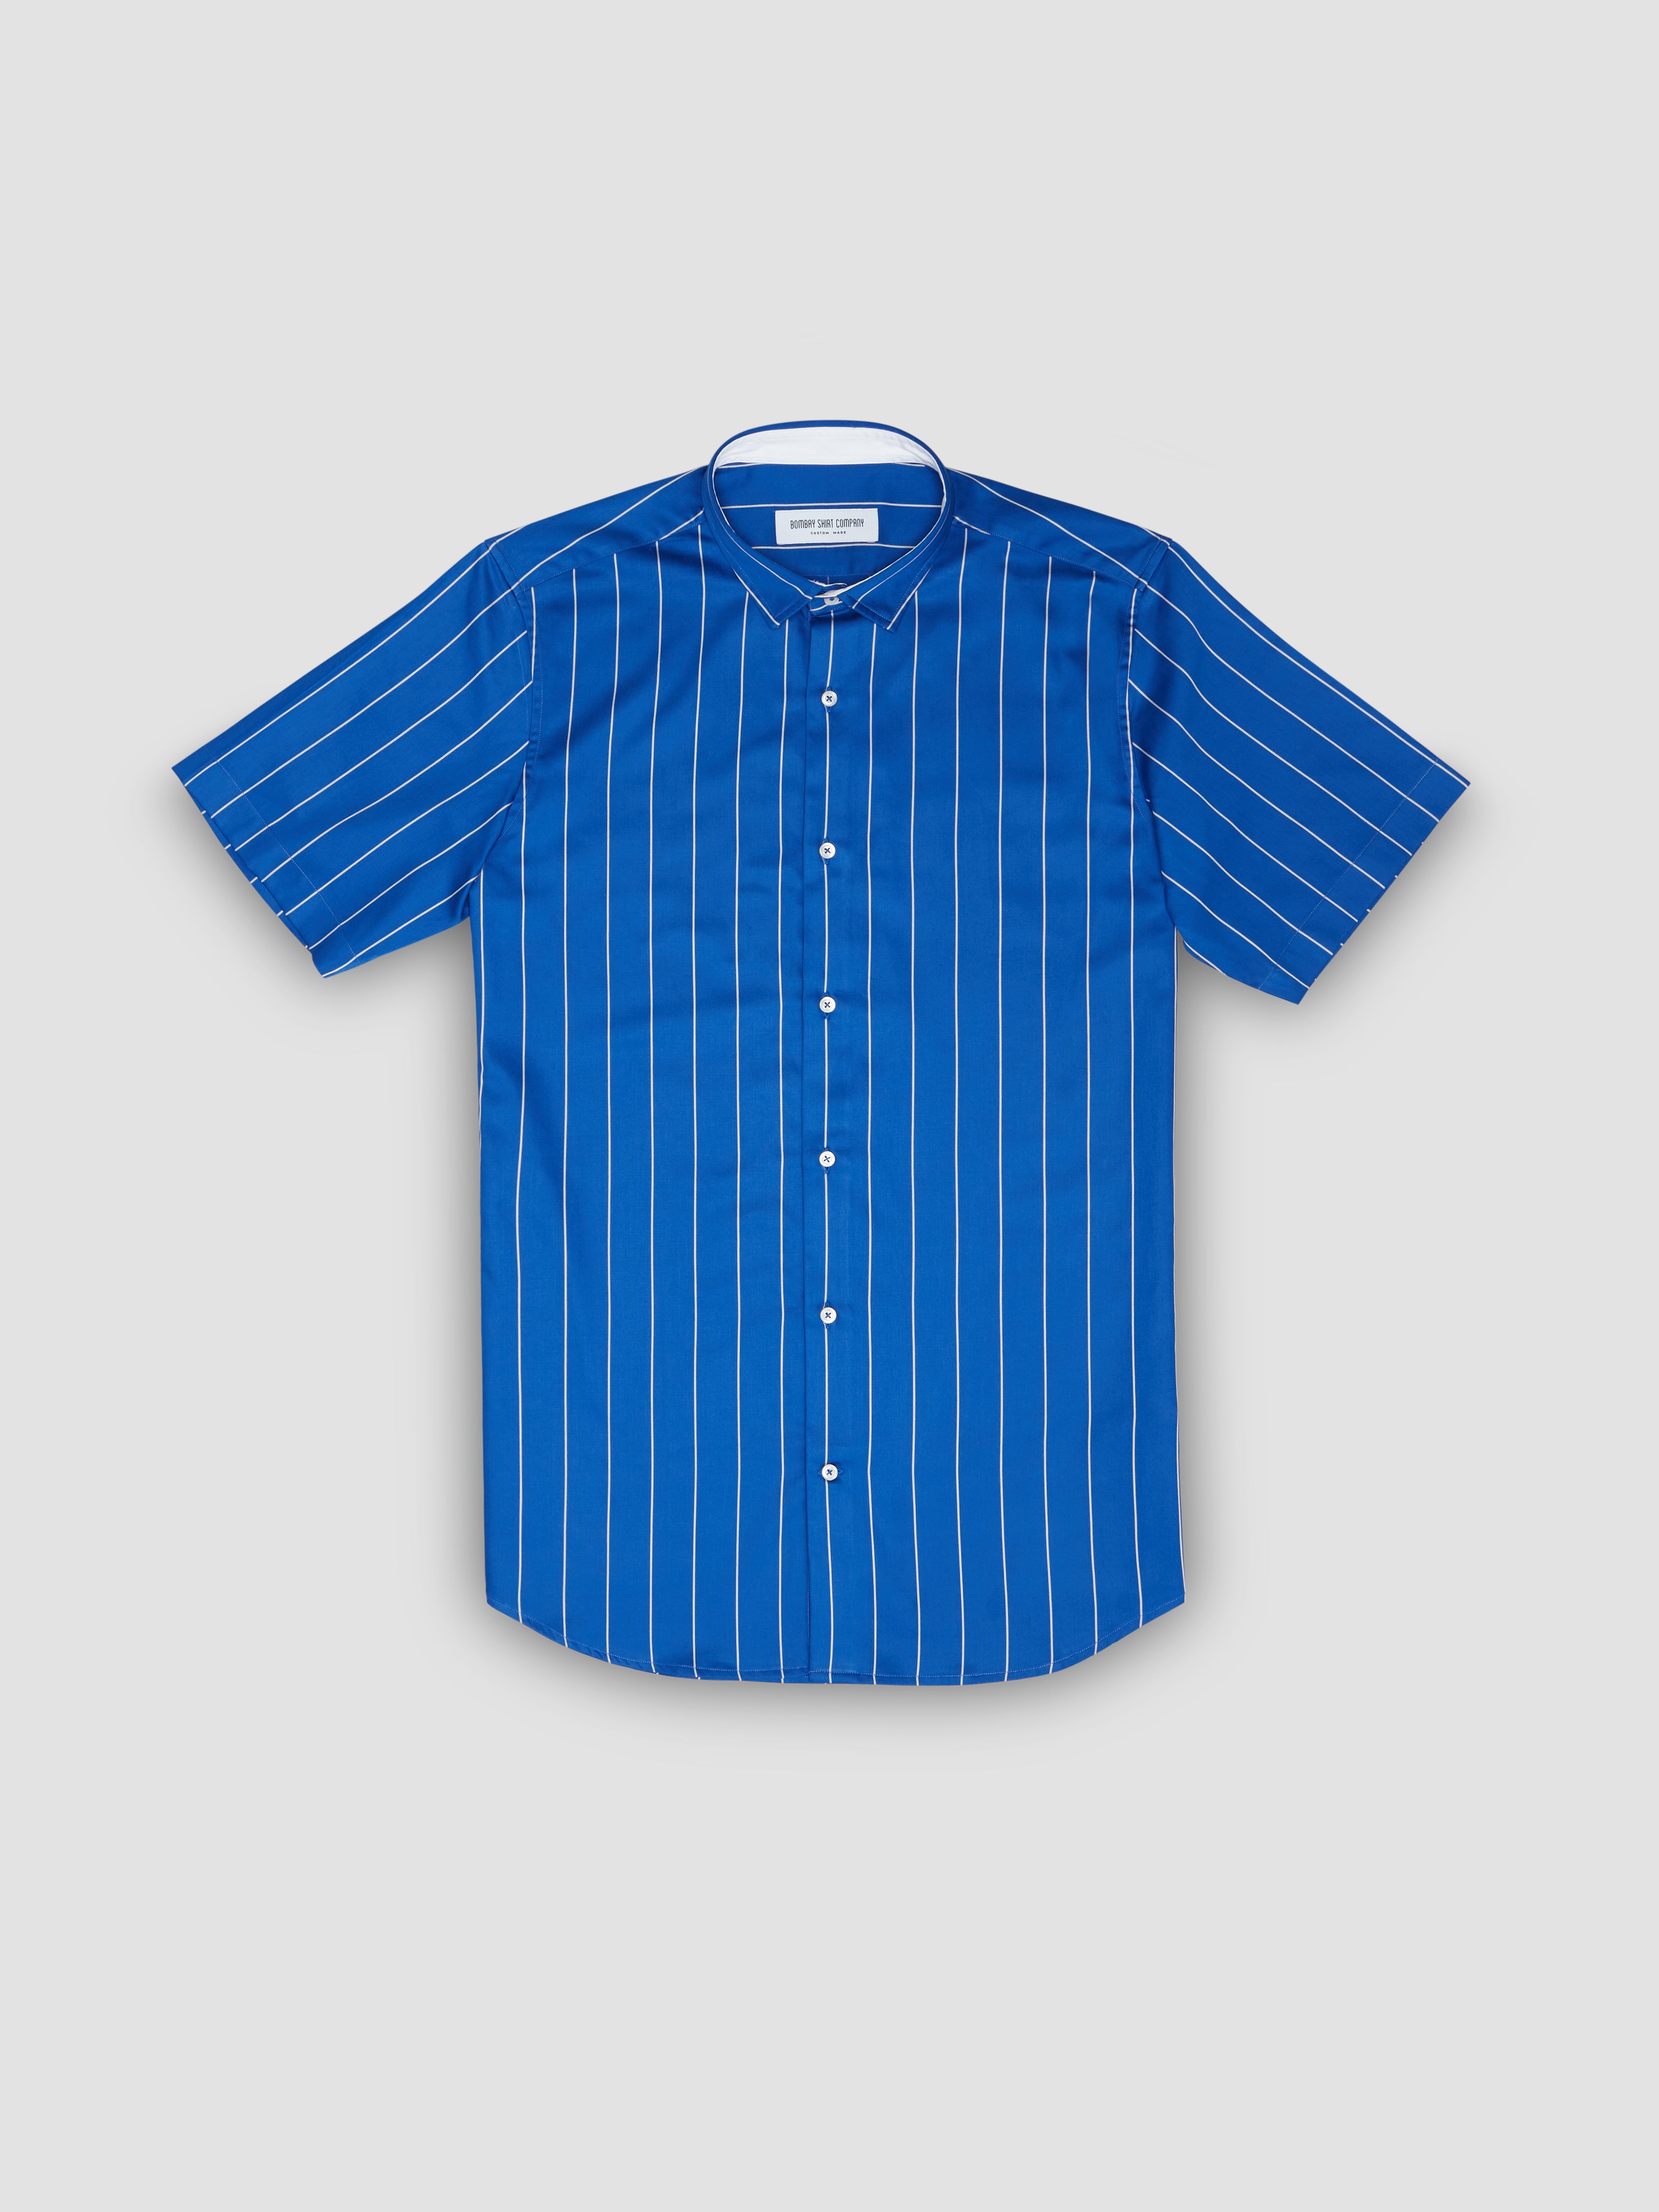 Bombay Shirt Company - Santorini Striped Shirt